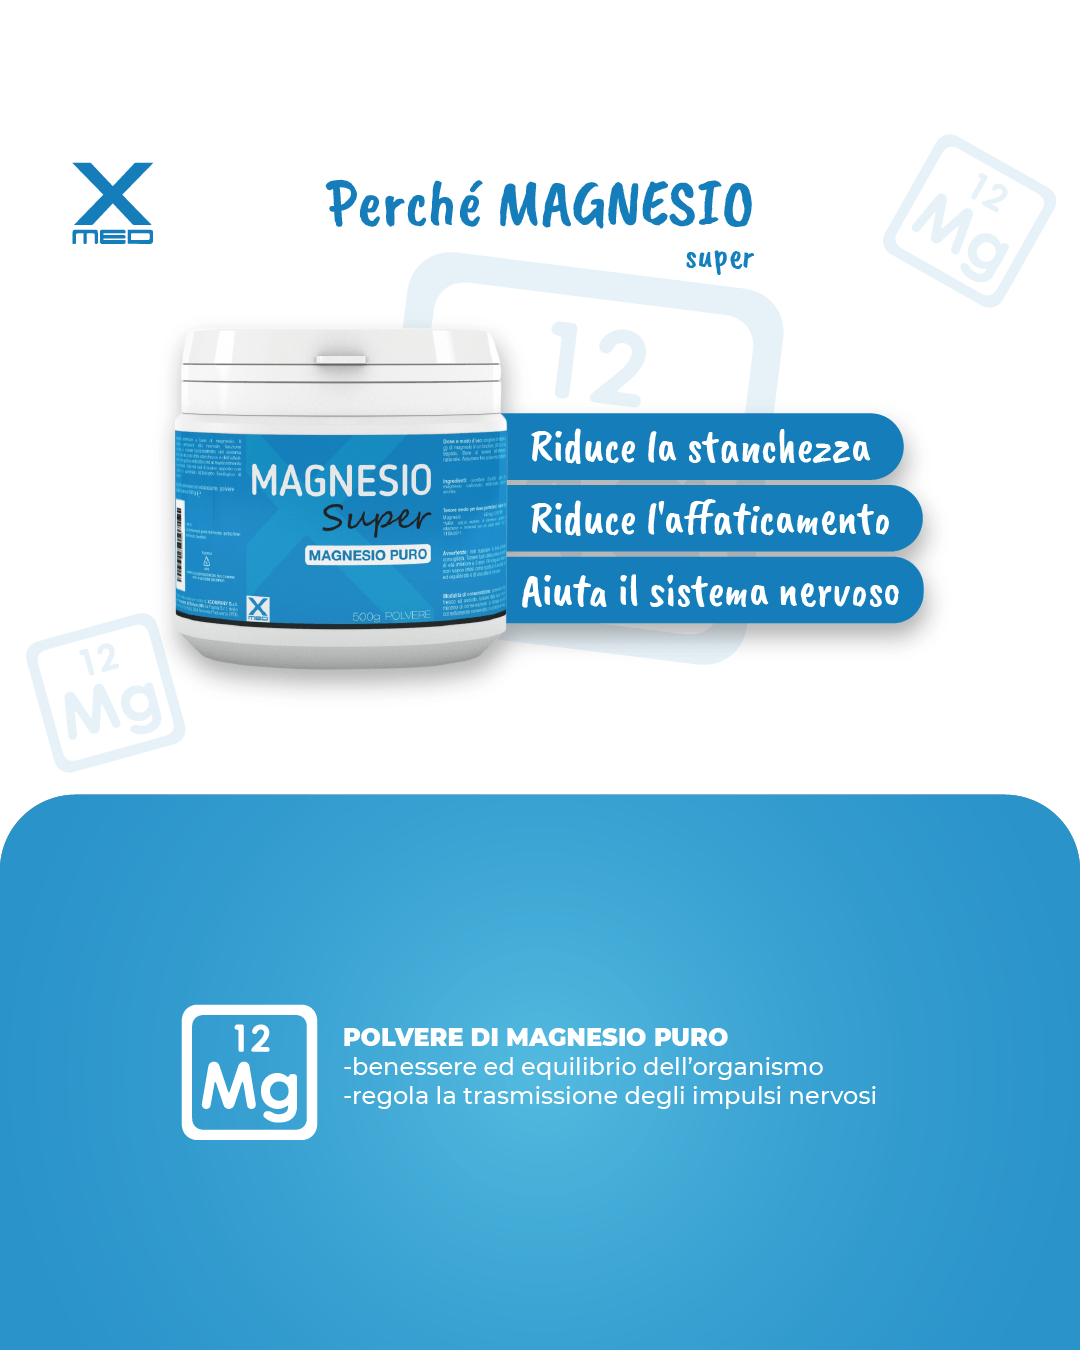 XMed Online – Magnesio Super (2)